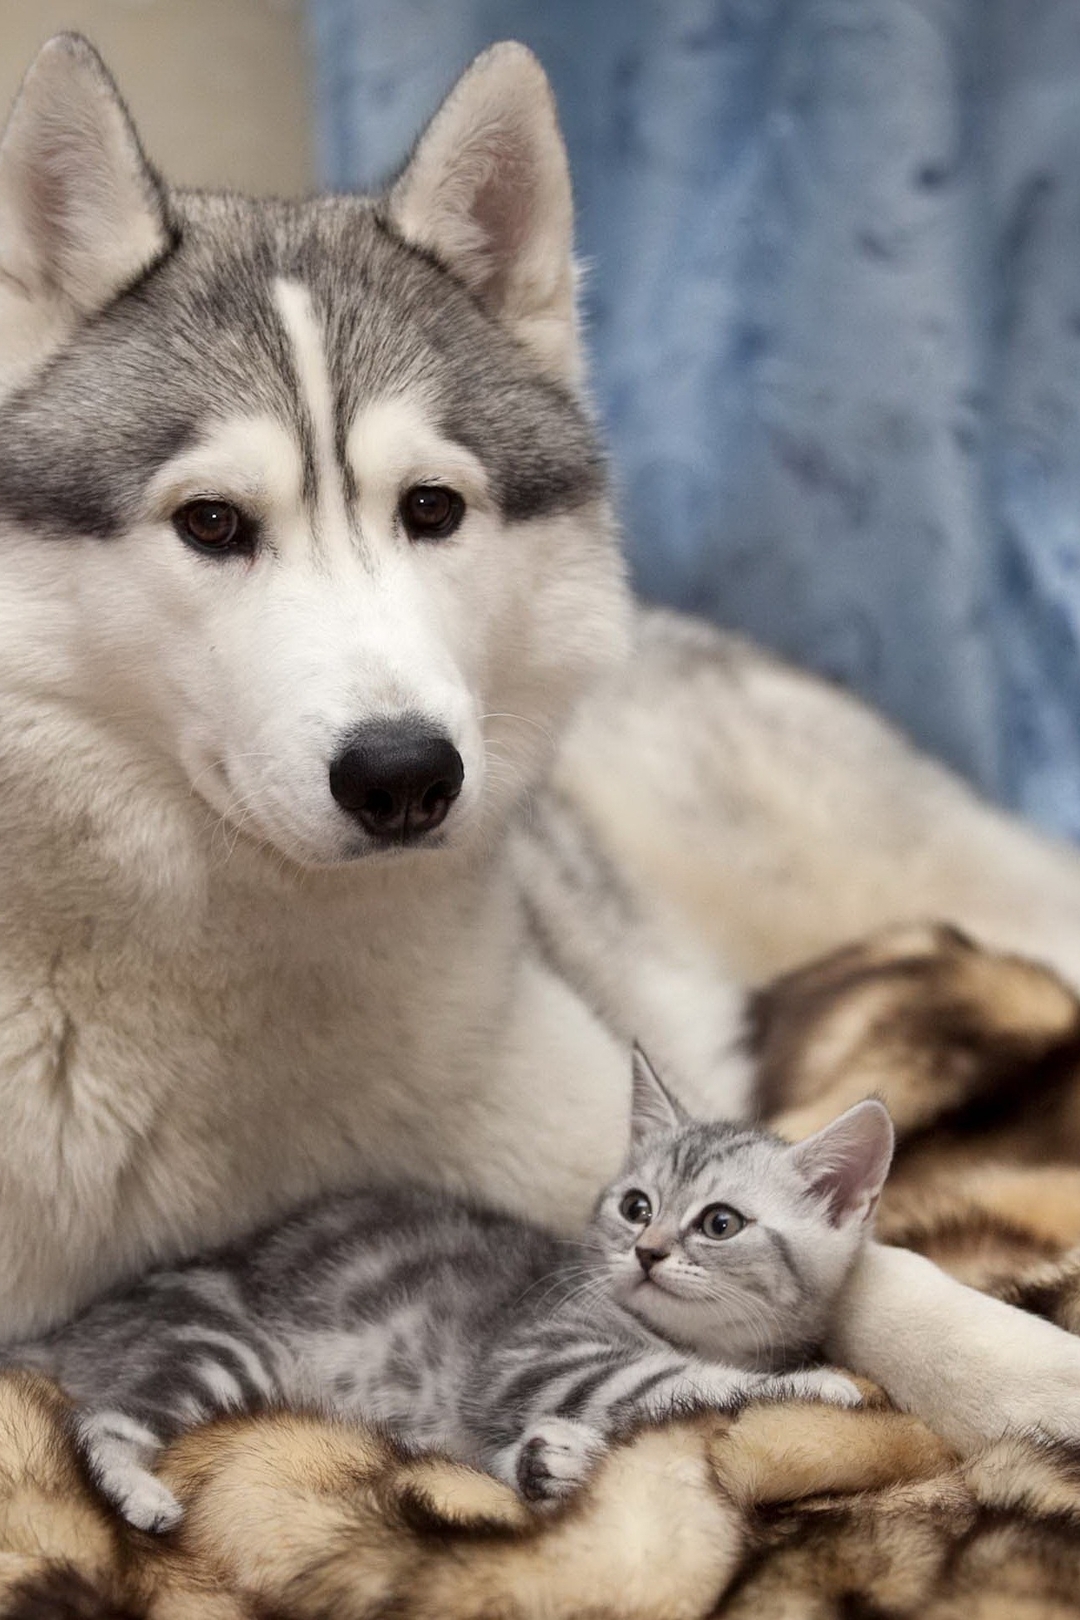 Image: Dog, Husky, kitten, muzzle, eyes, look, hair, lie, plaid